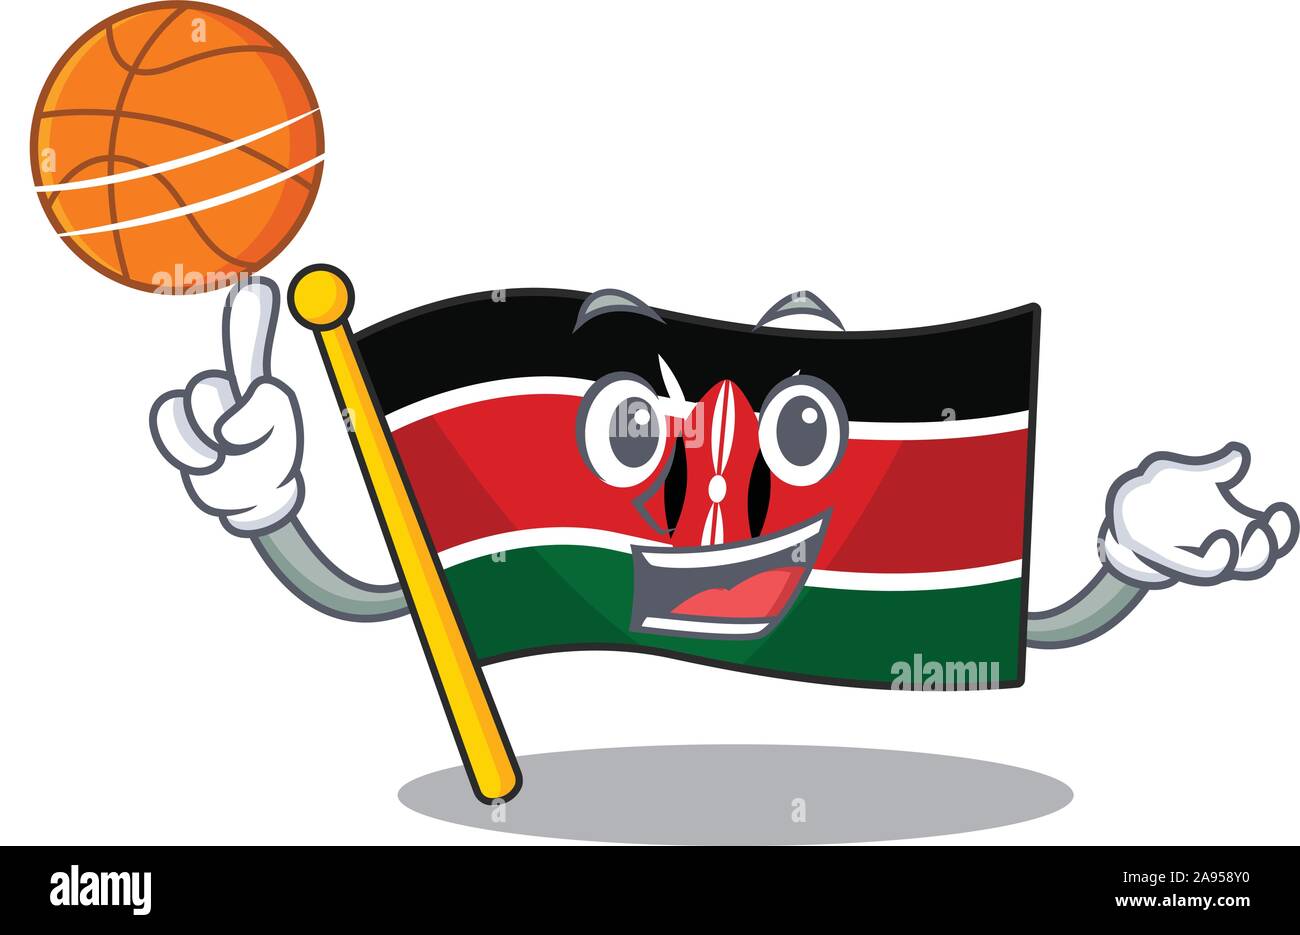 Flag kenya holding basketball cartoon with character happy Stock Vector